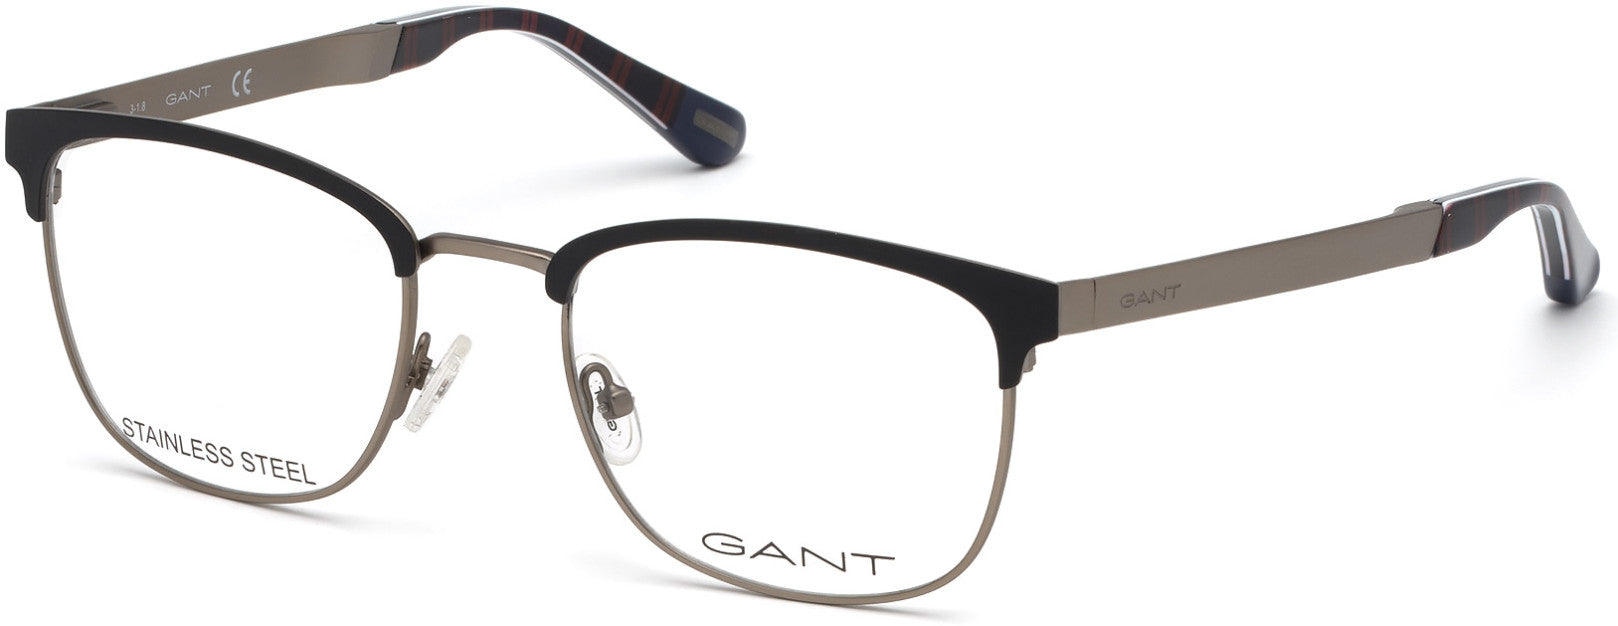 Gant GA3181 Square Eyeglasses 002-002 - Matte Black